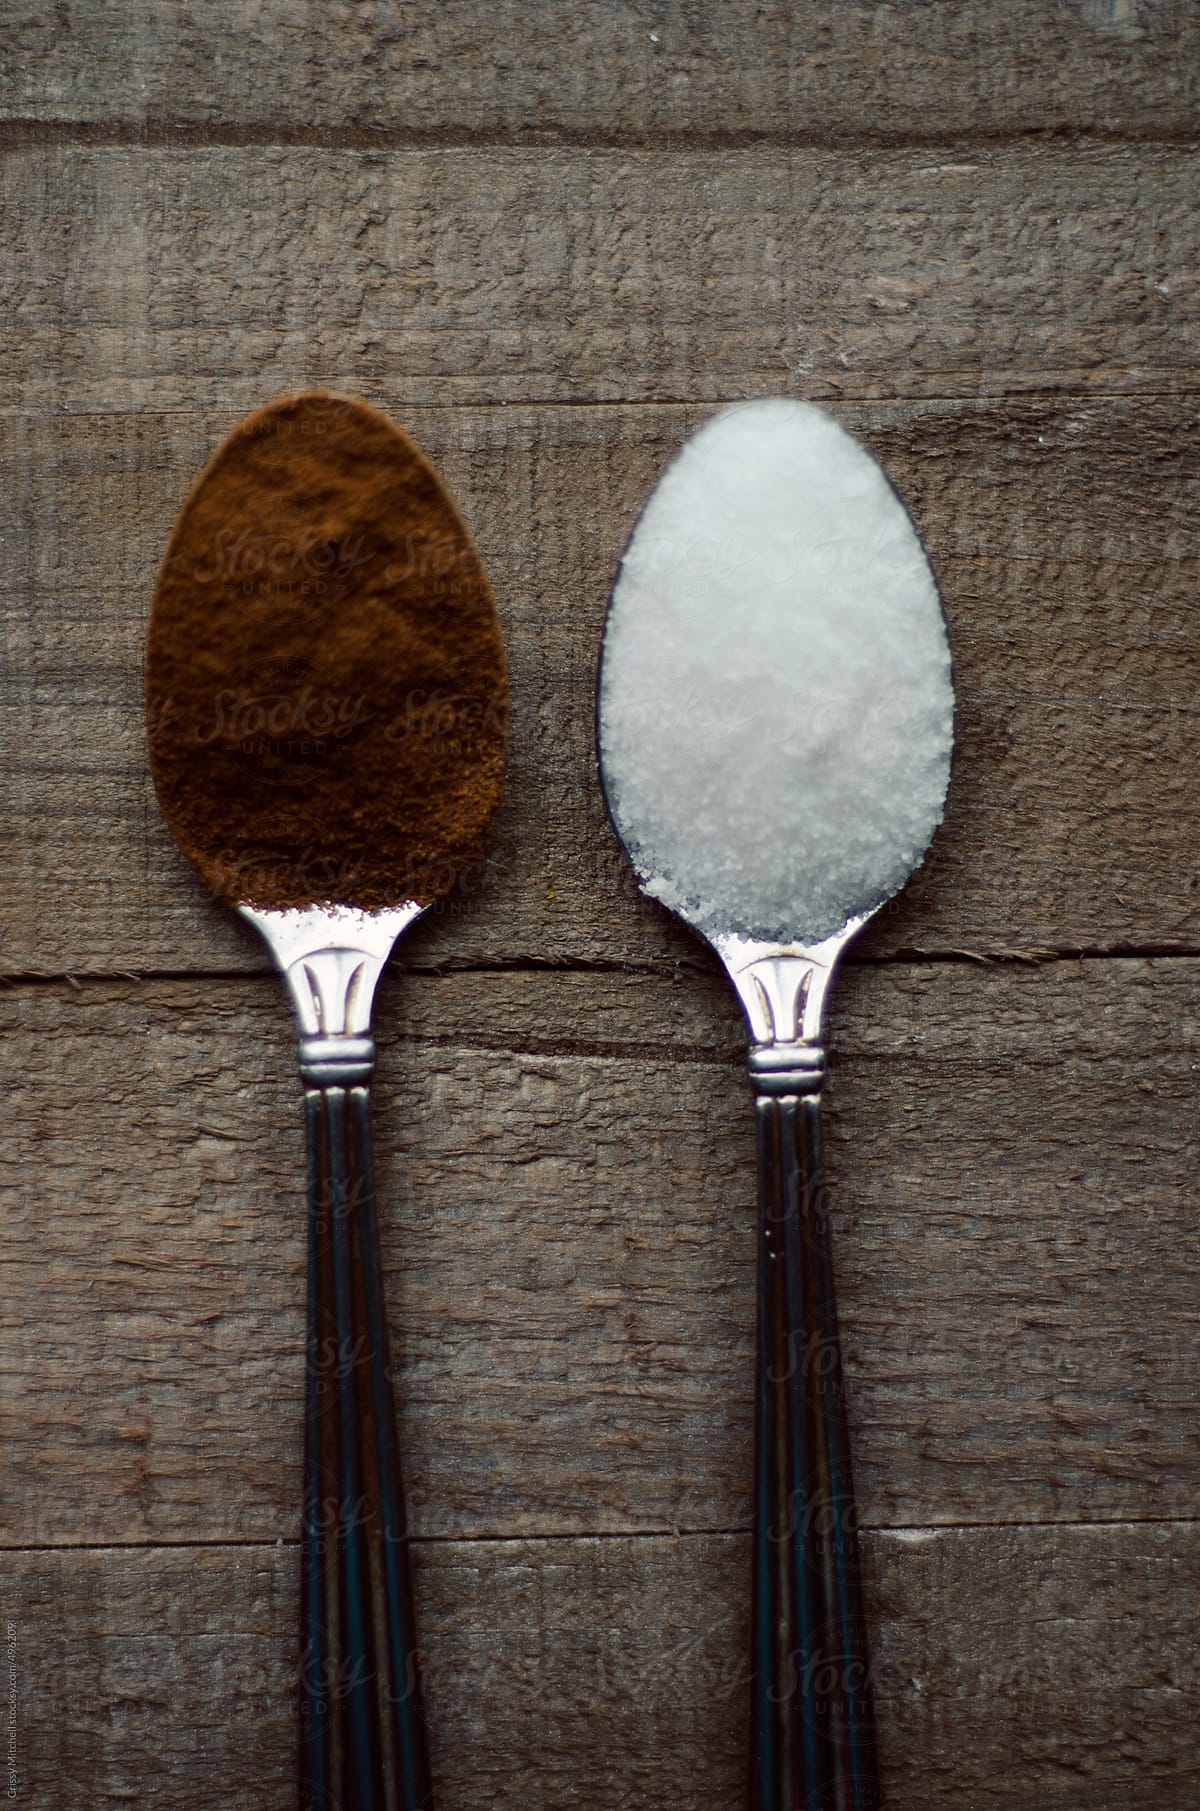 spoons of cinnamon and sugar